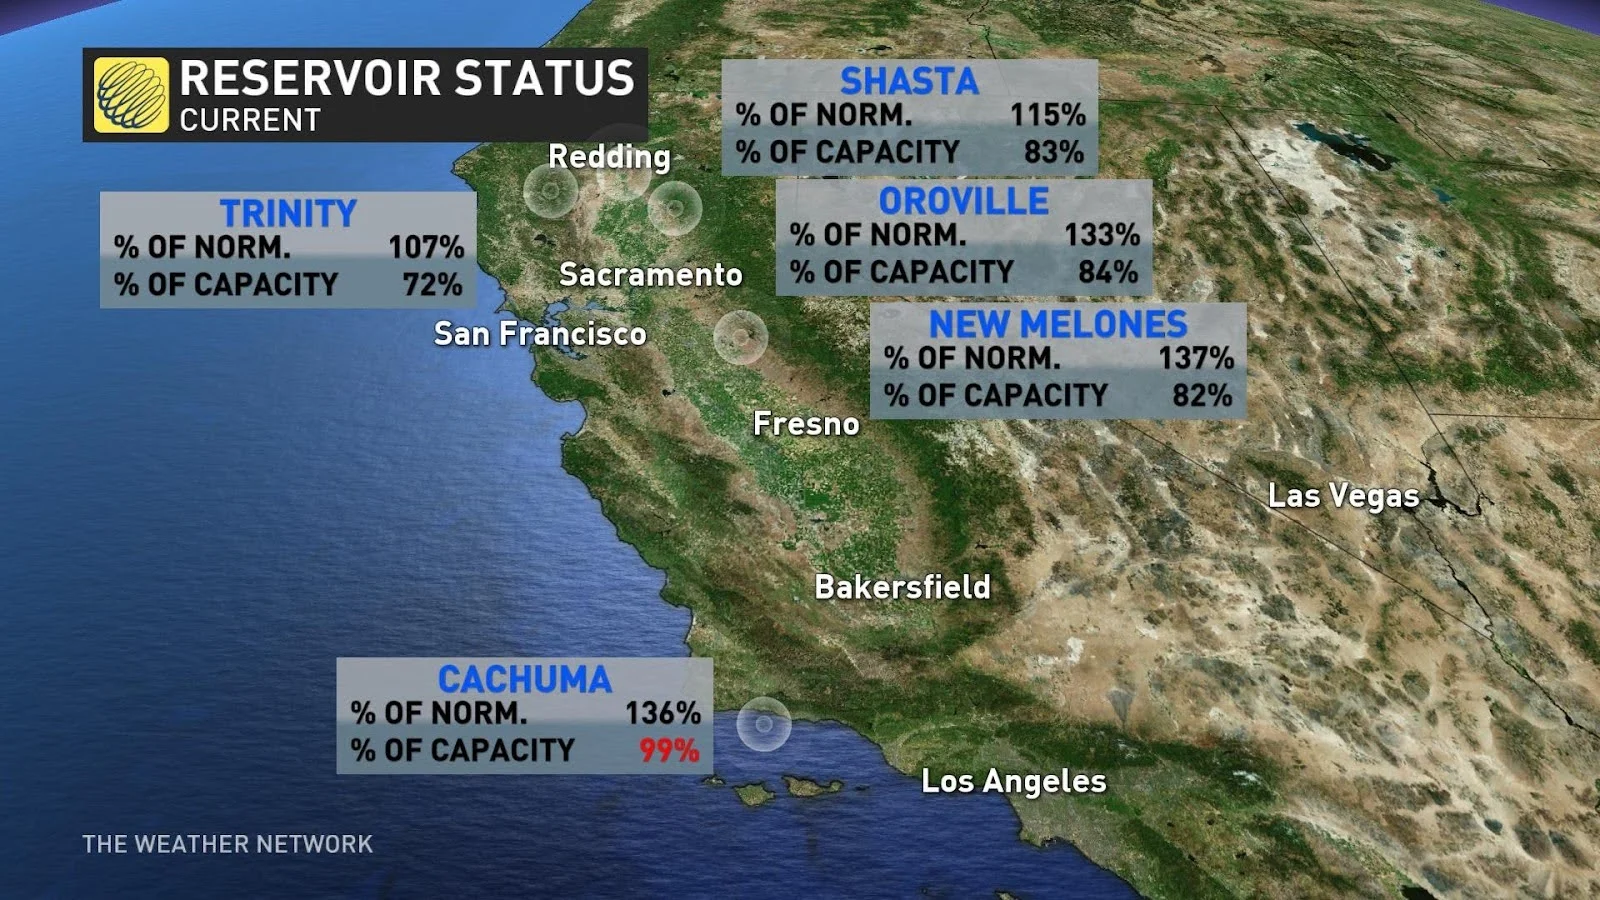 California reservoir status